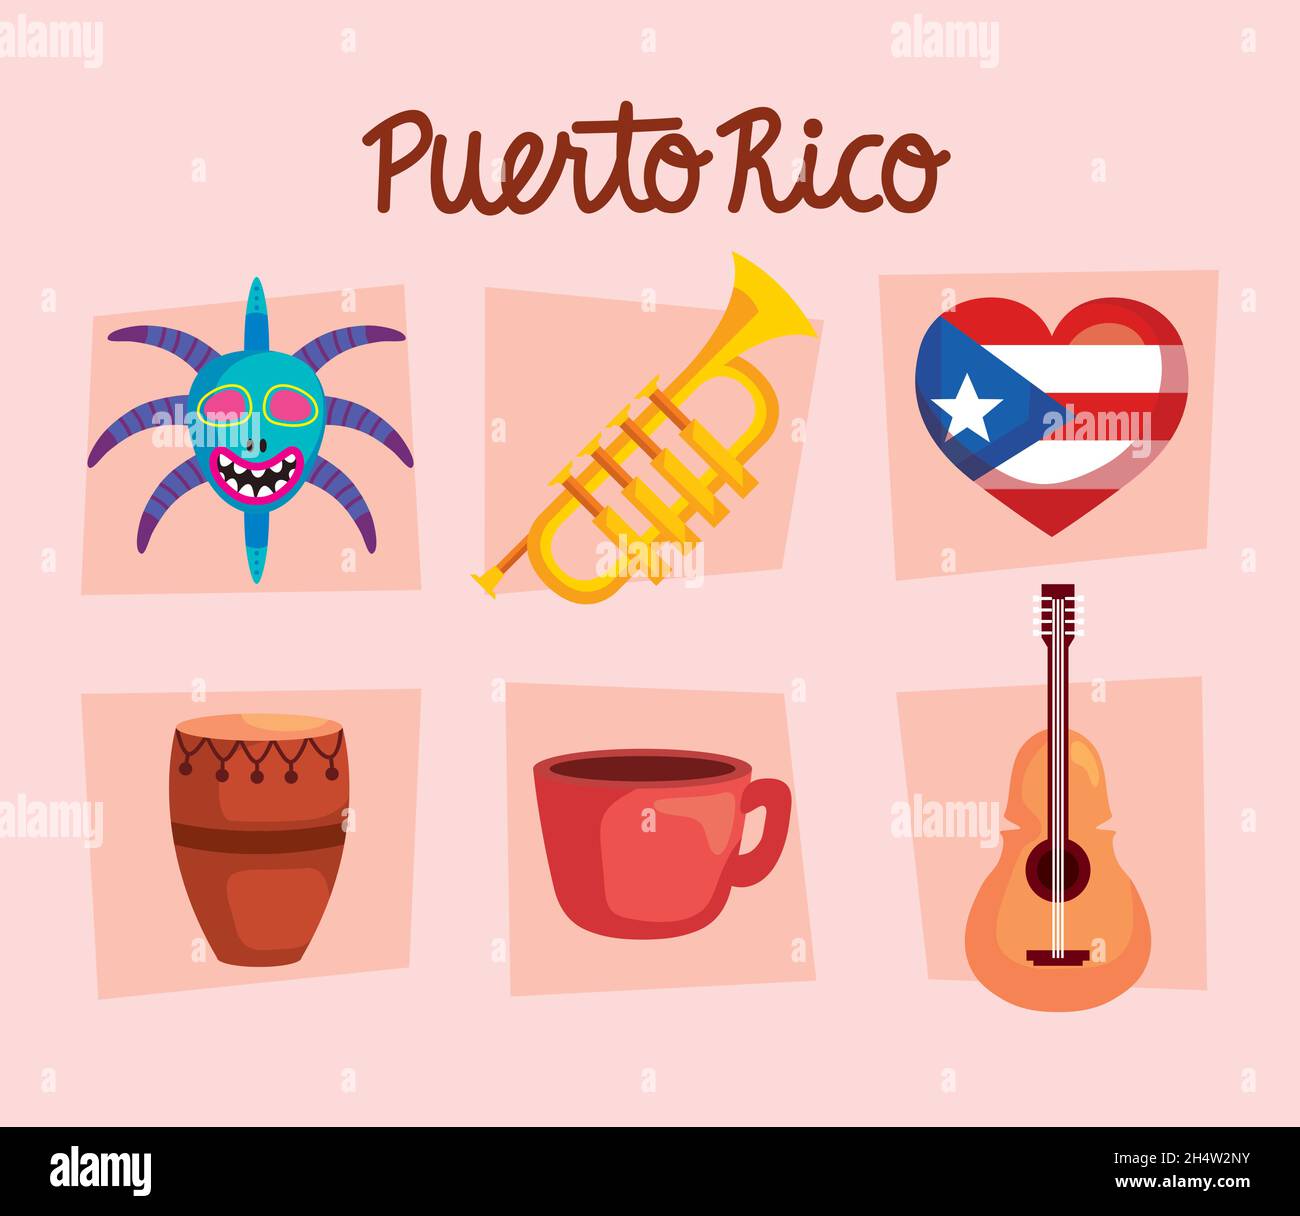 puerto rico culture icons Stock Vector